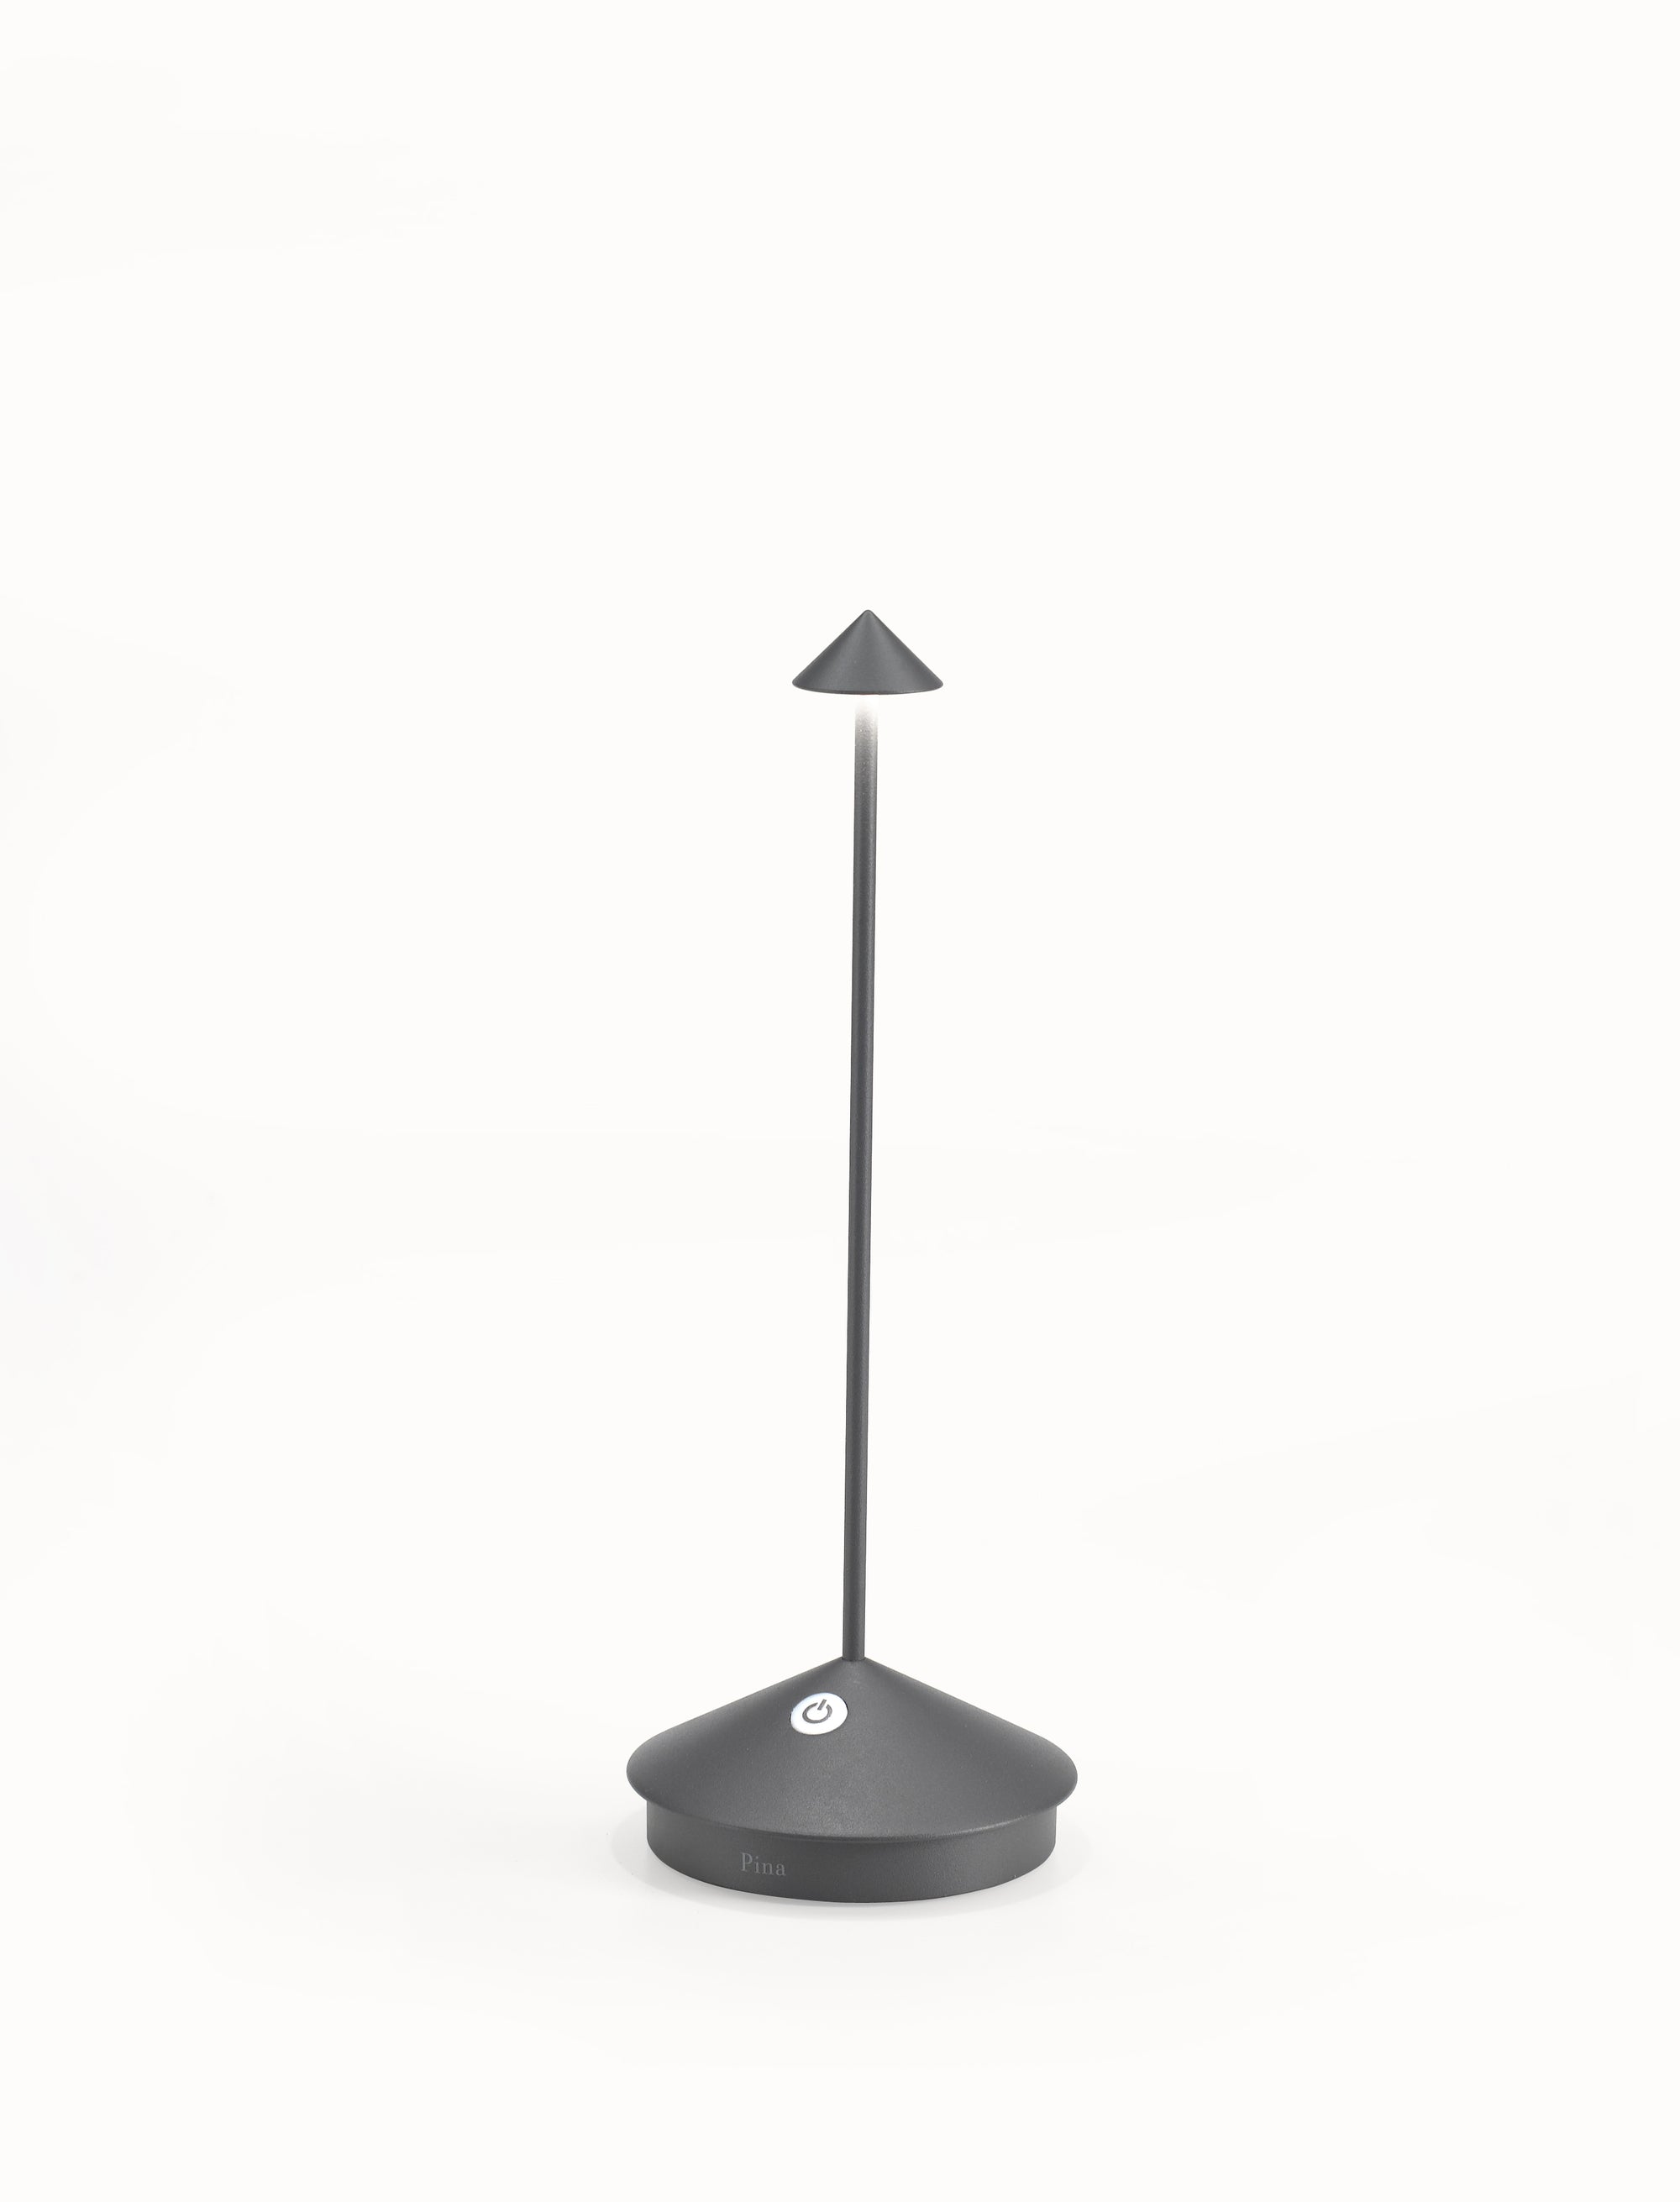 PINA Pro Portable Table Lamp - DARK GREY